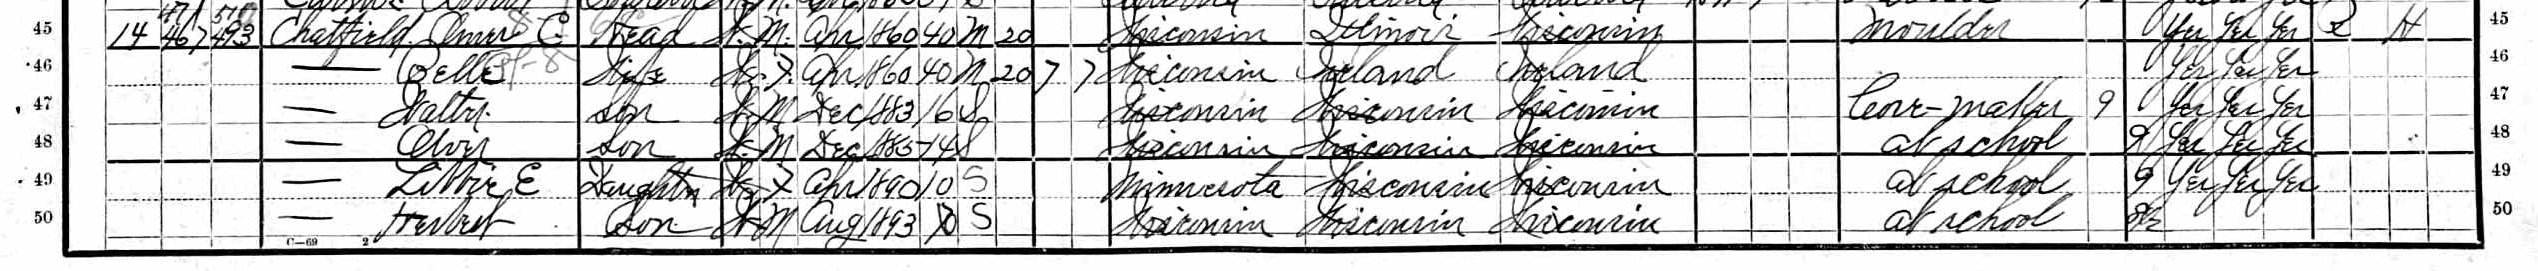 CHATFIELD Omer Corning 1860-1908 Census 1900.jpg